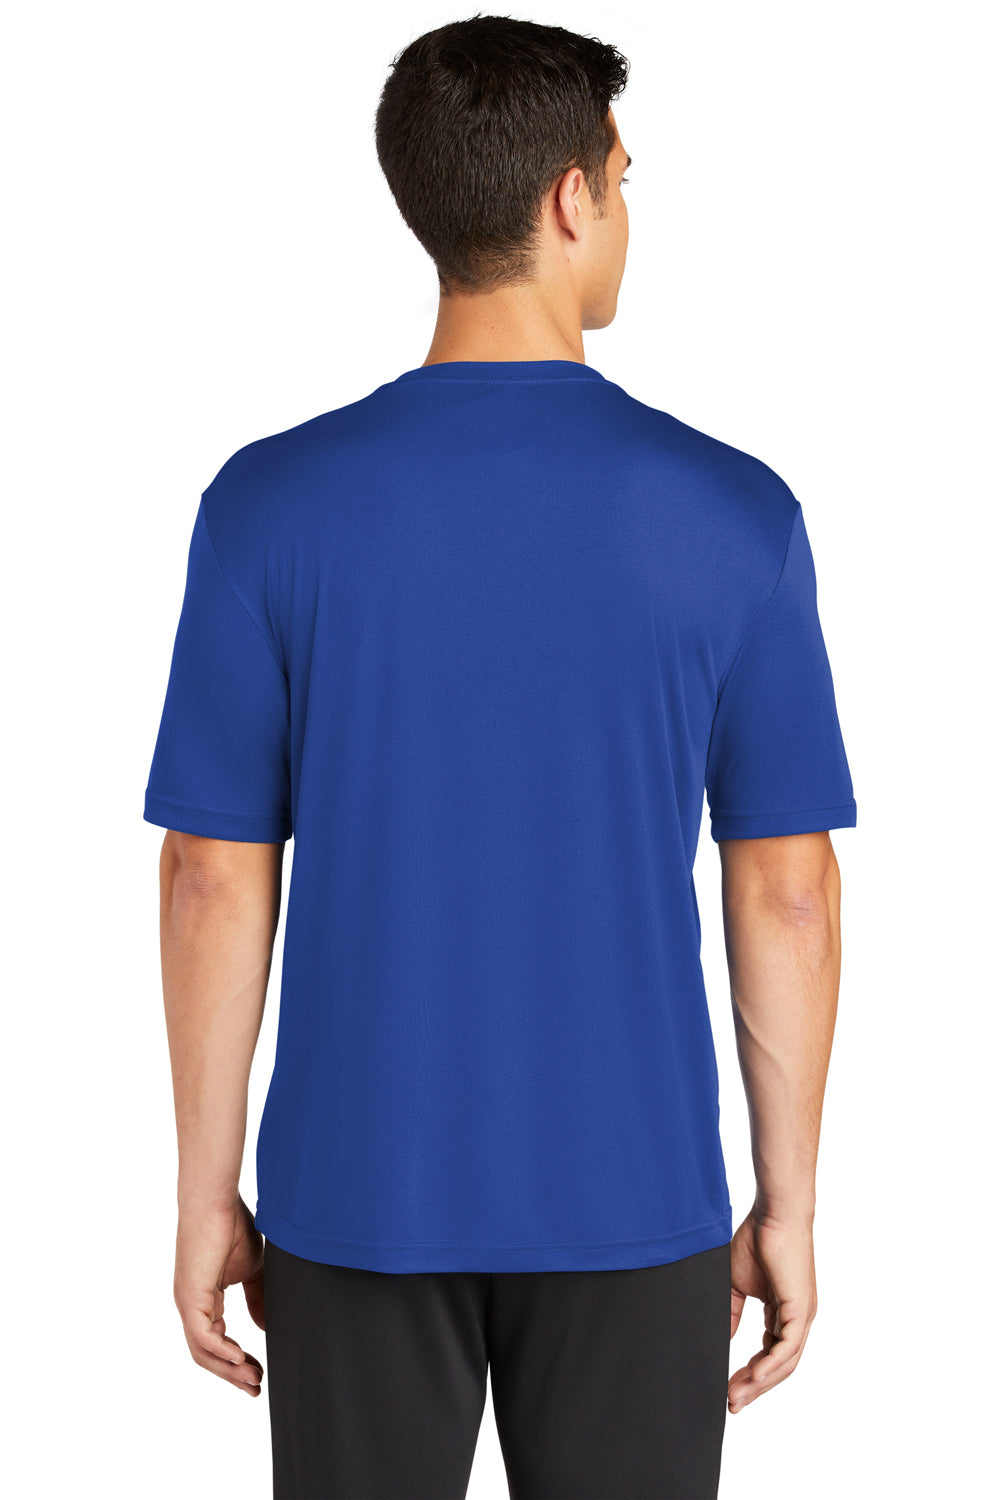 Sport-Tek ST350 Mens Competitor Moisture Wicking Short Sleeve Crewneck T-Shirt Royal Blue Back